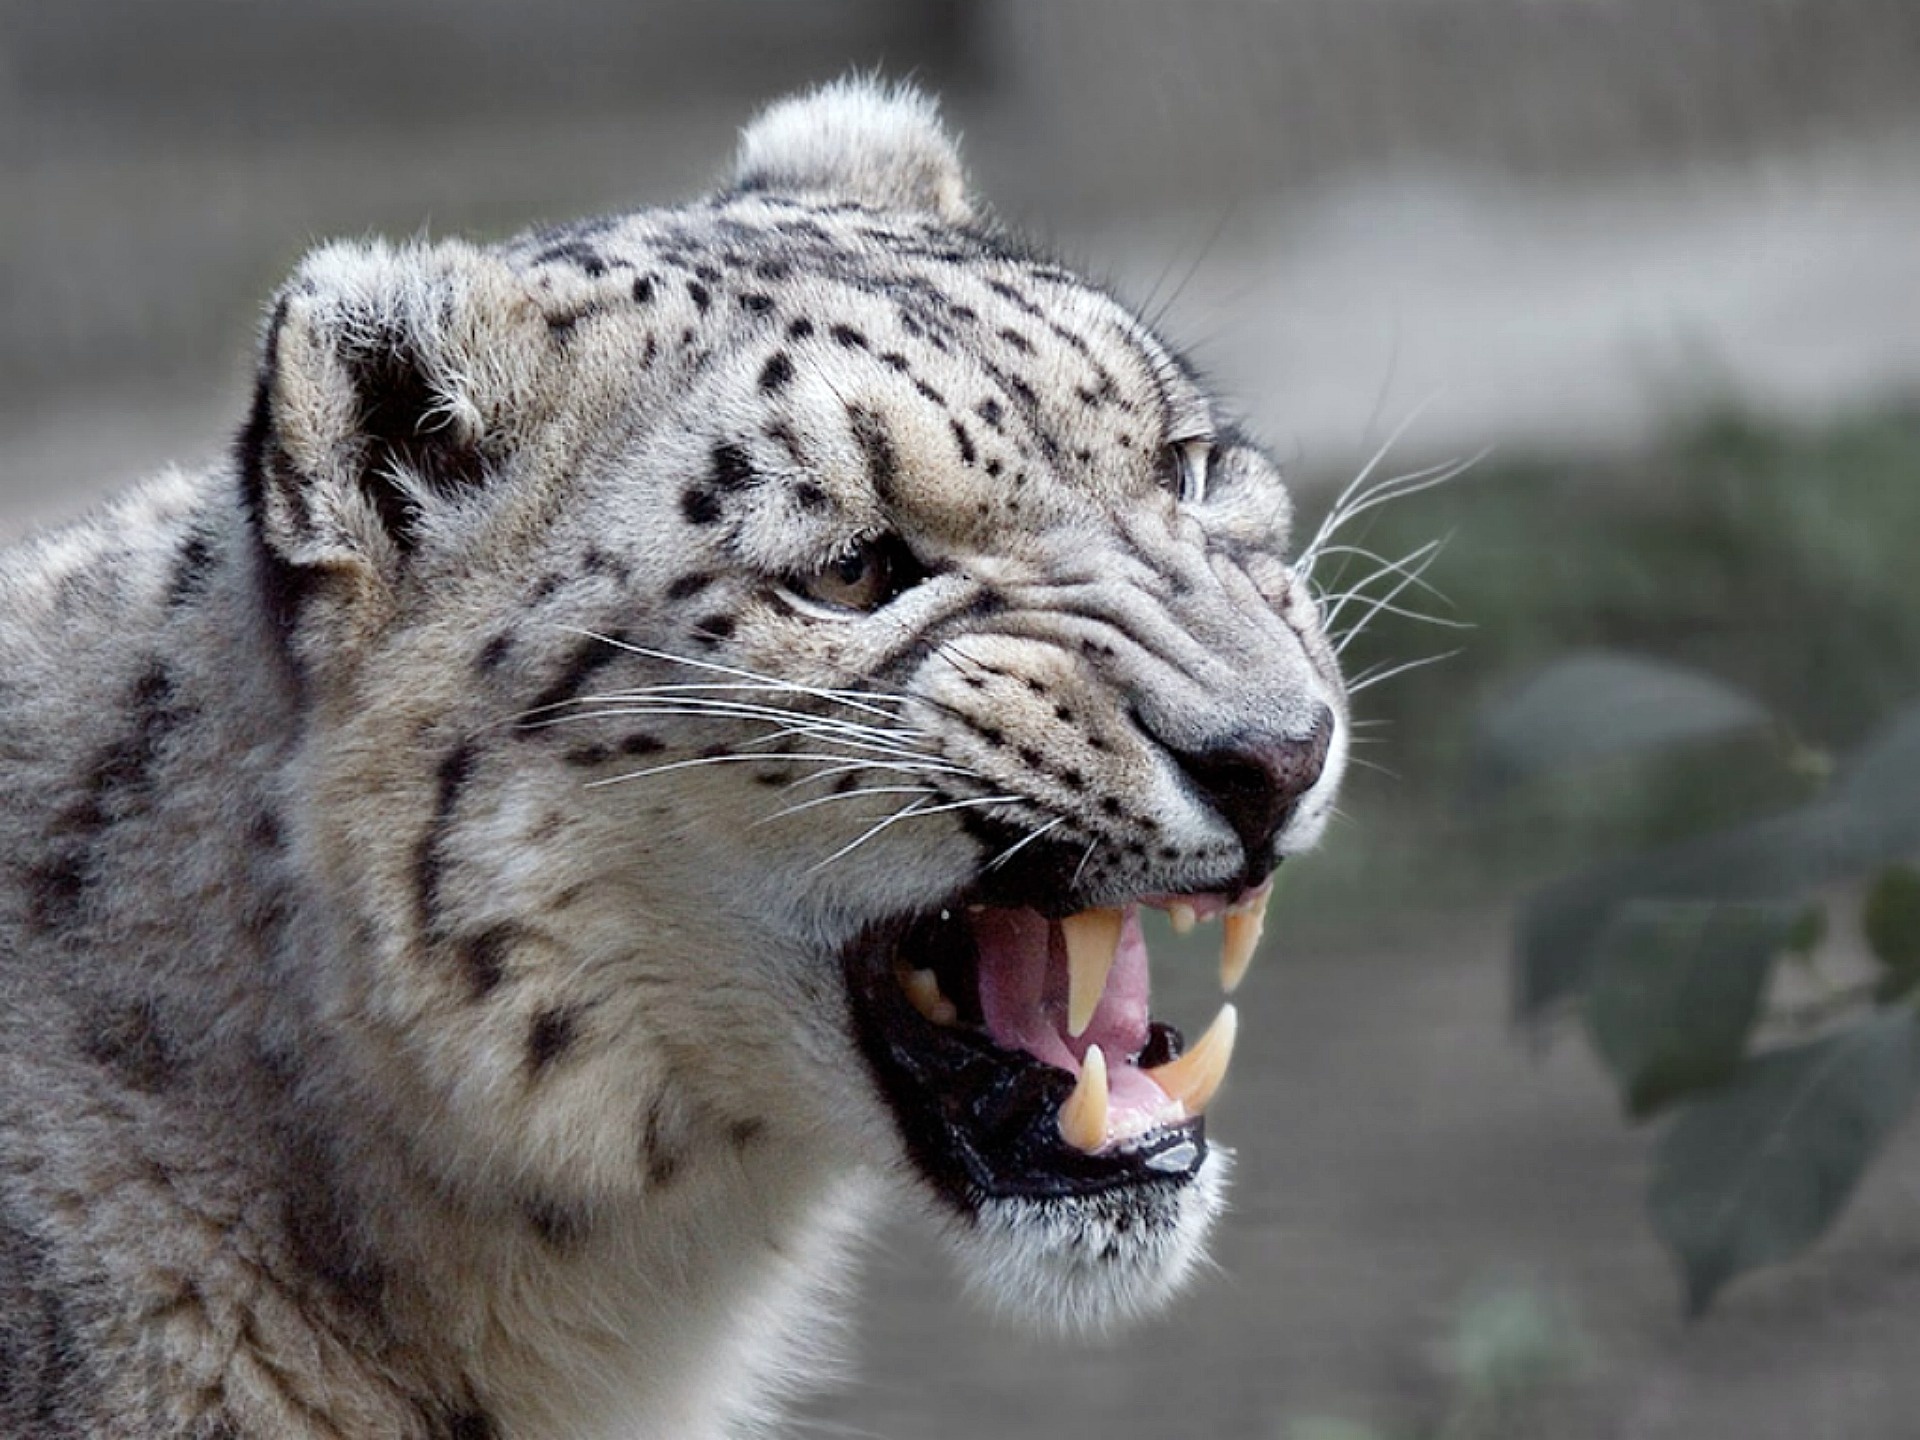 Snow Leopard wallpapers, 1080p resolution, High-definition images, Exquisite feline, 1920x1440 HD Desktop